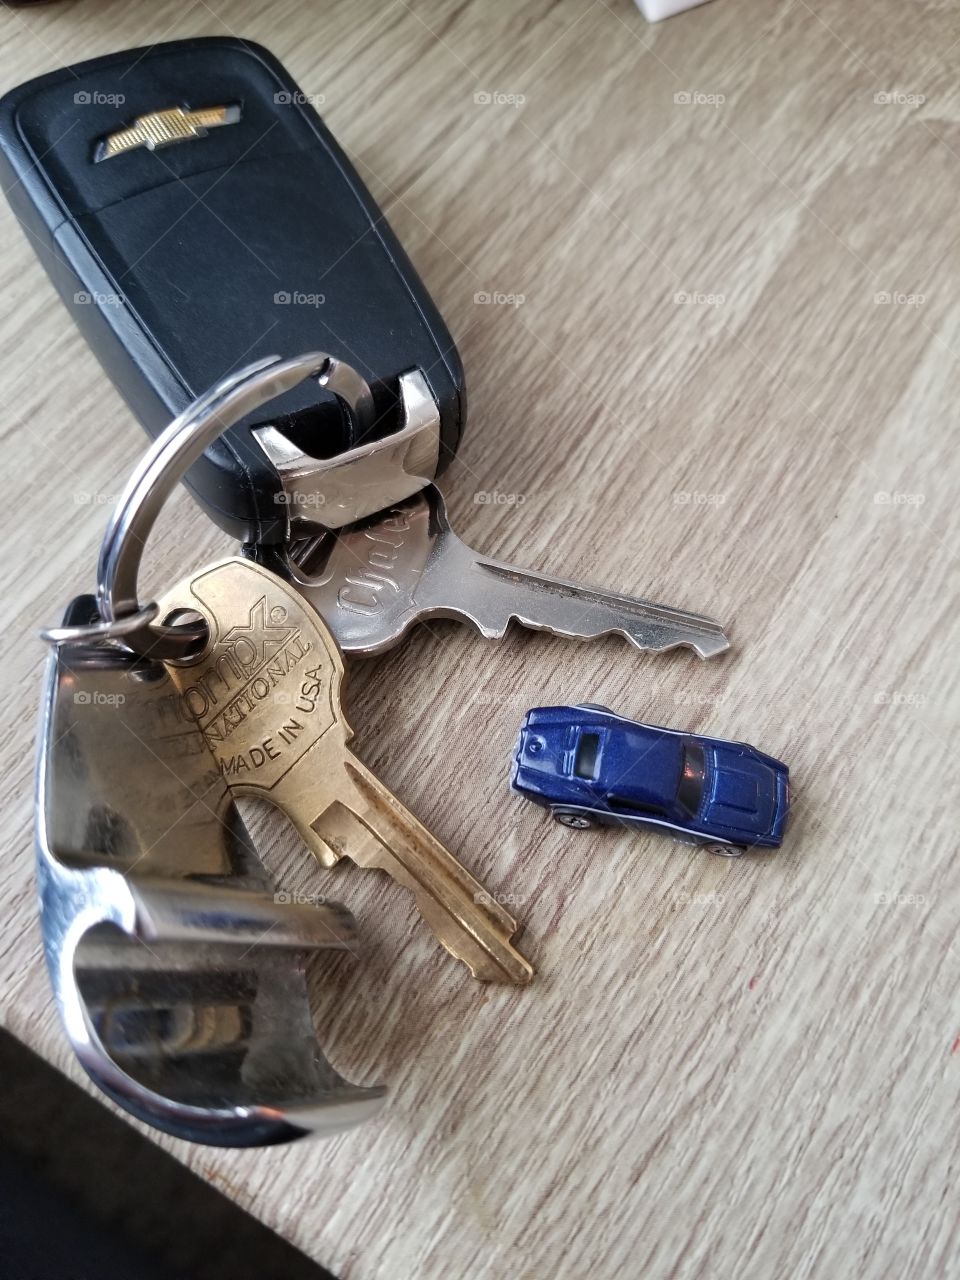 miniature match box car and keys